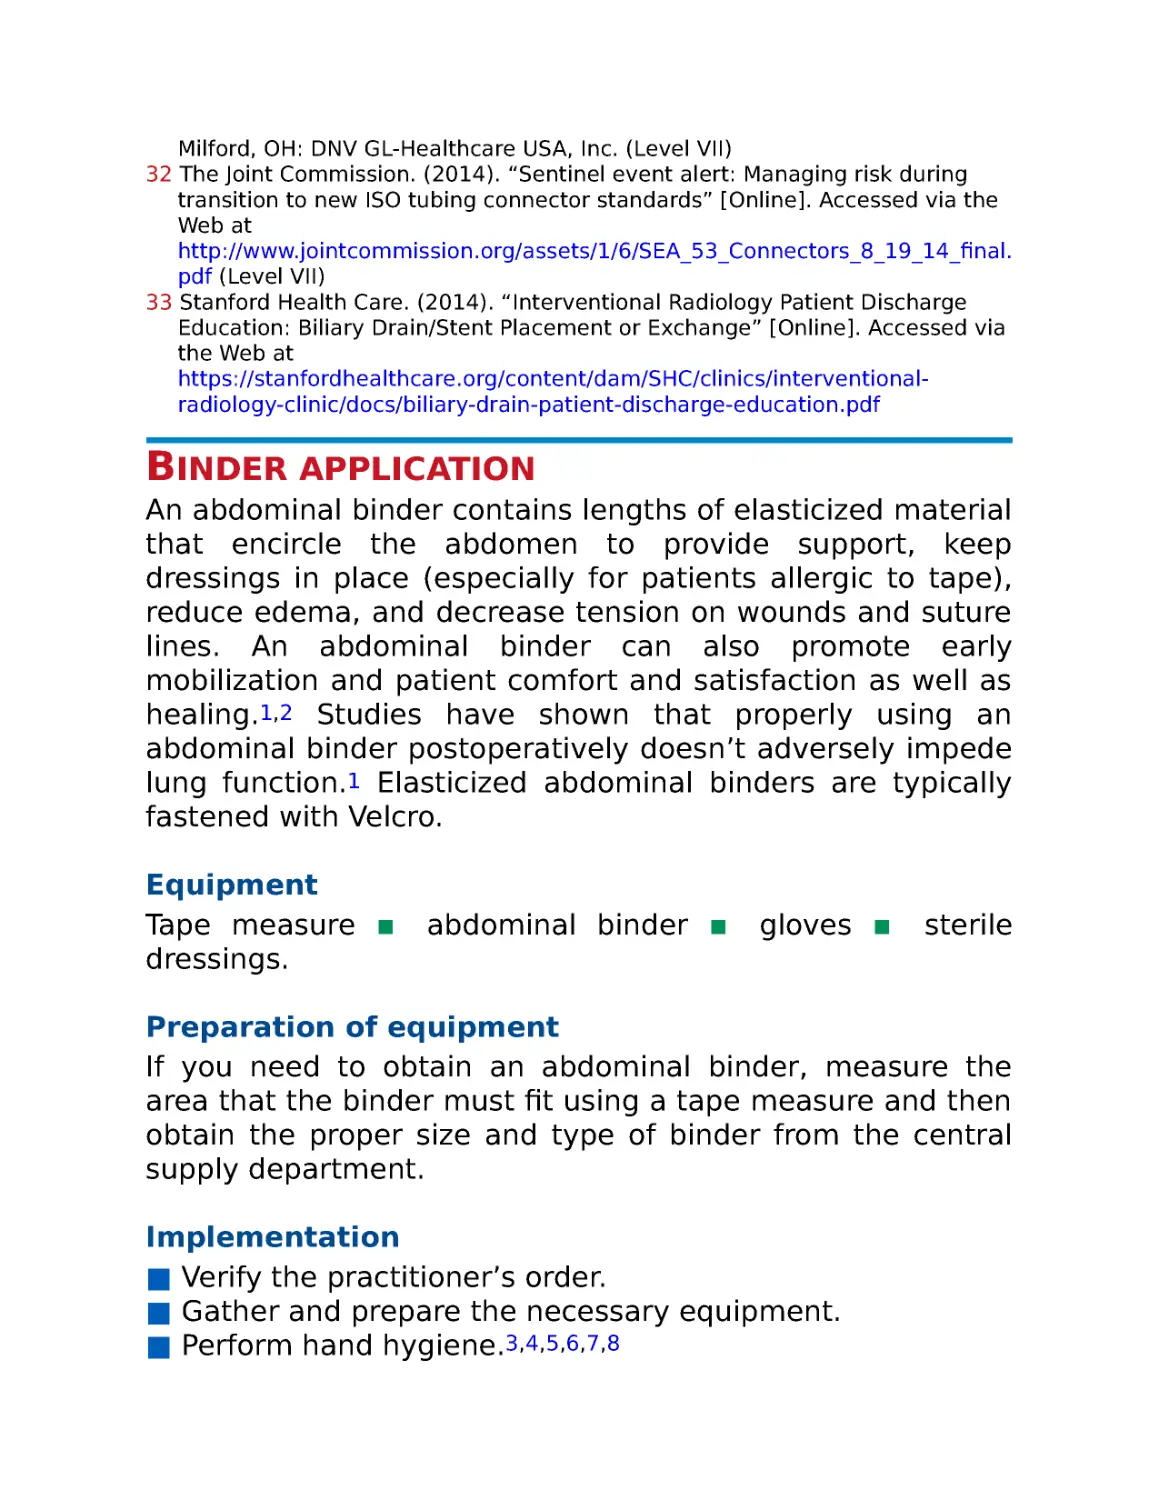 Binder application